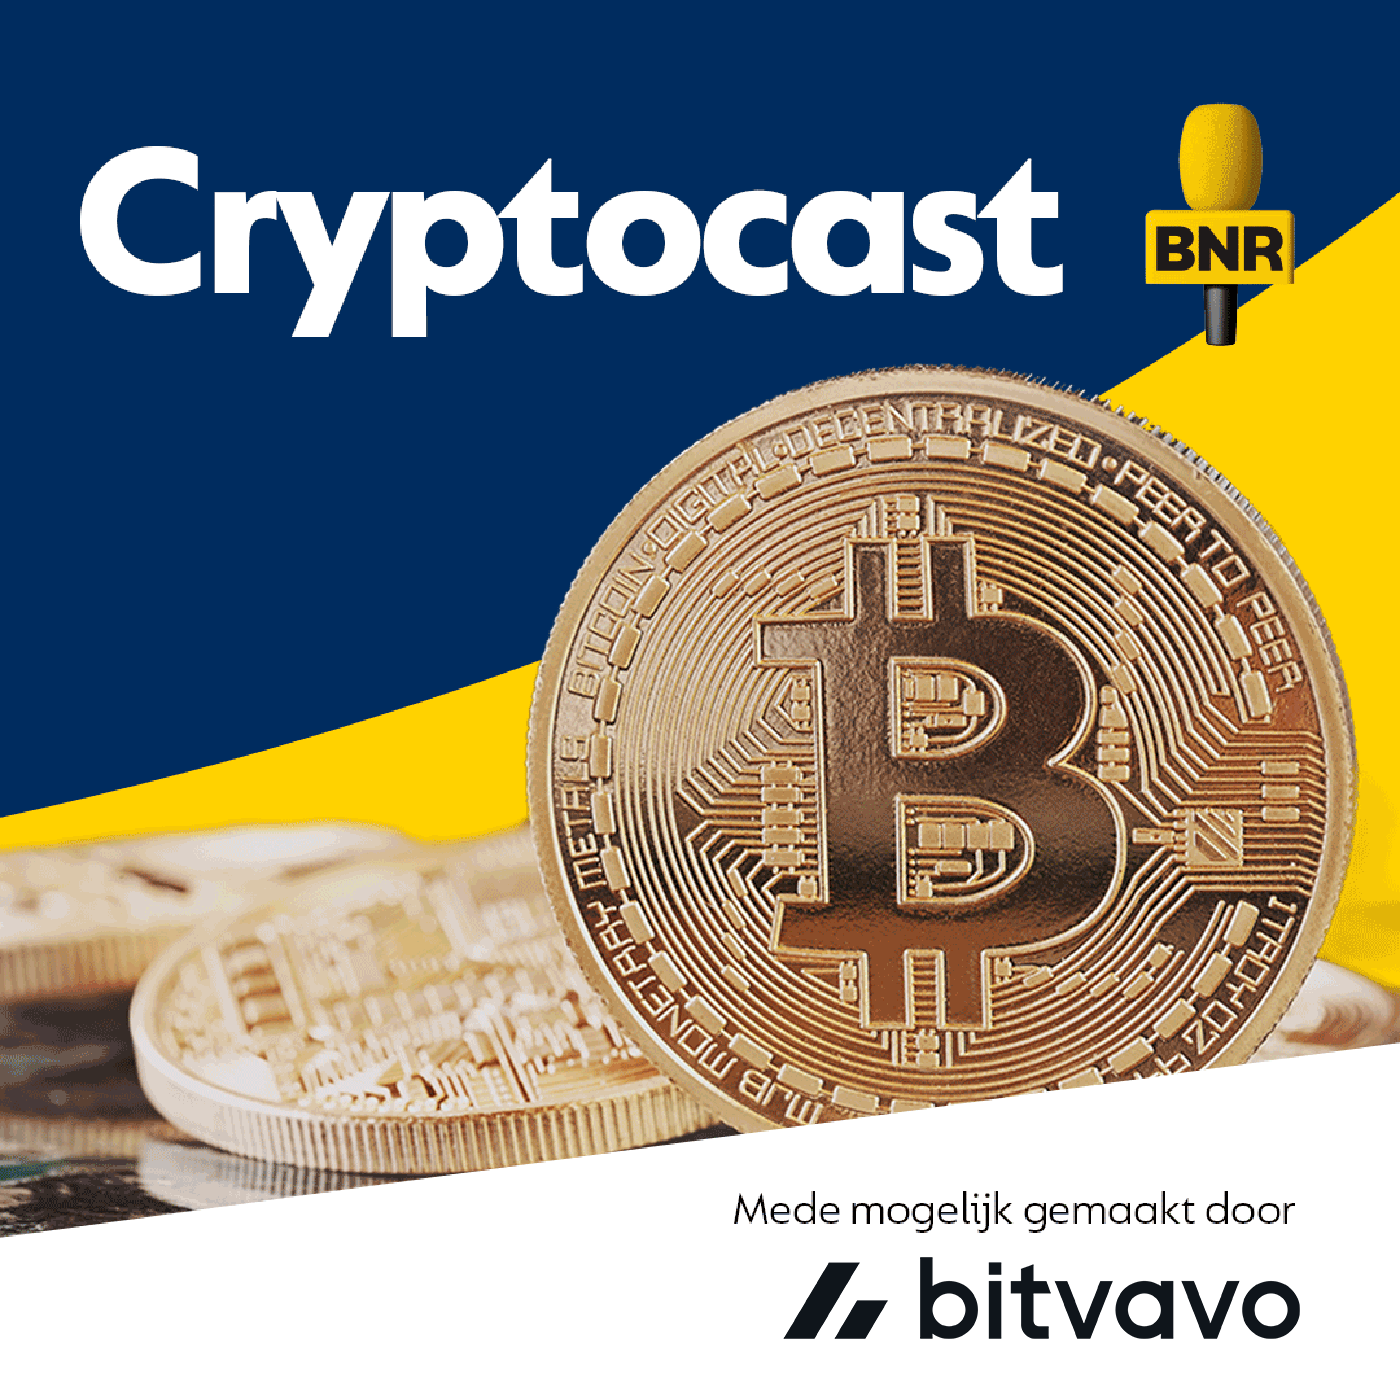 219 B: De Nederlandse cryptomarkt